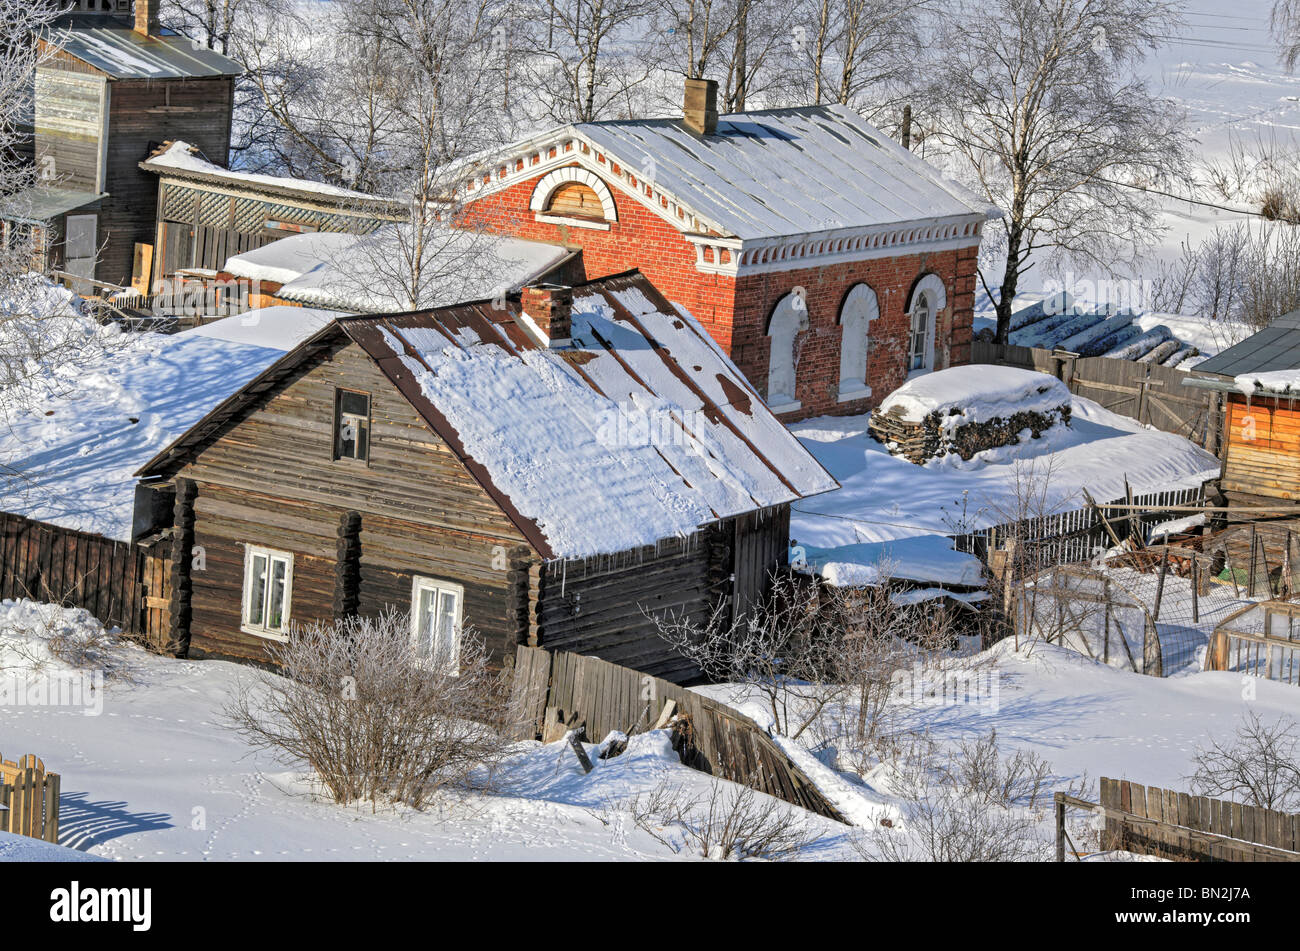 Belozersk, Vologda region, Russia Stock Photo